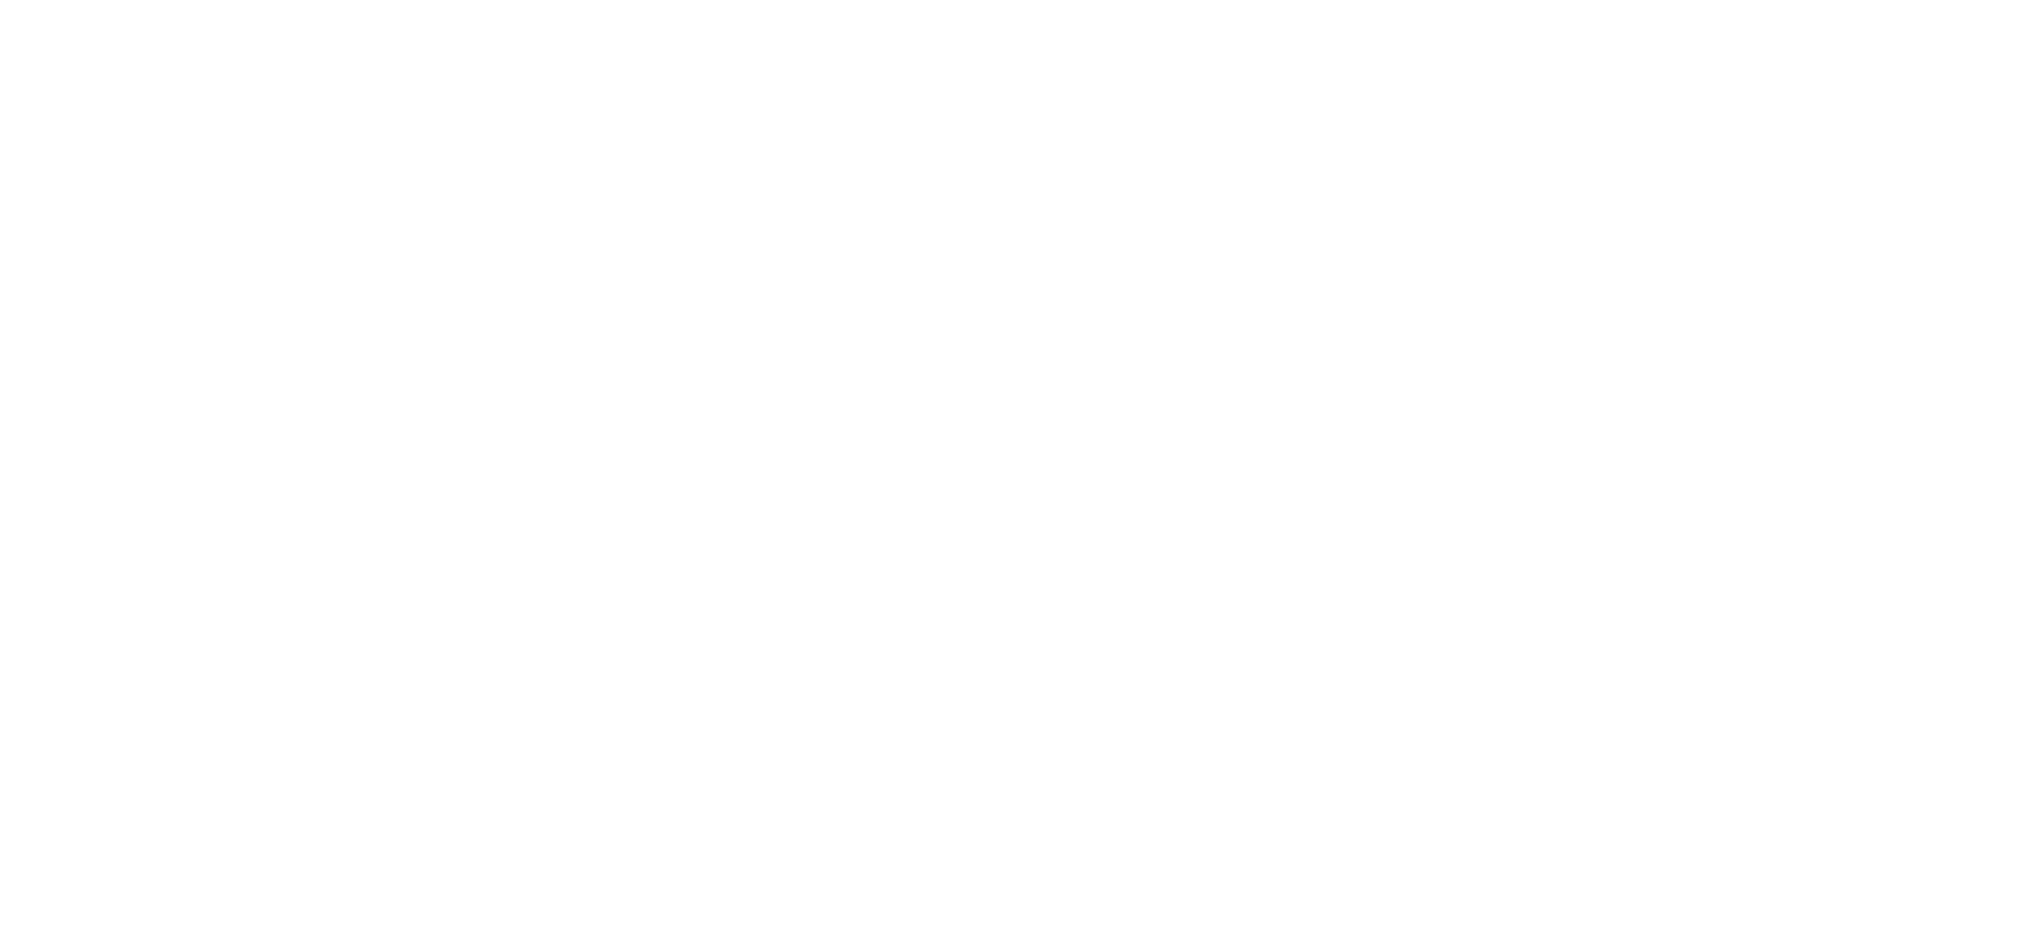 Improved Breathing